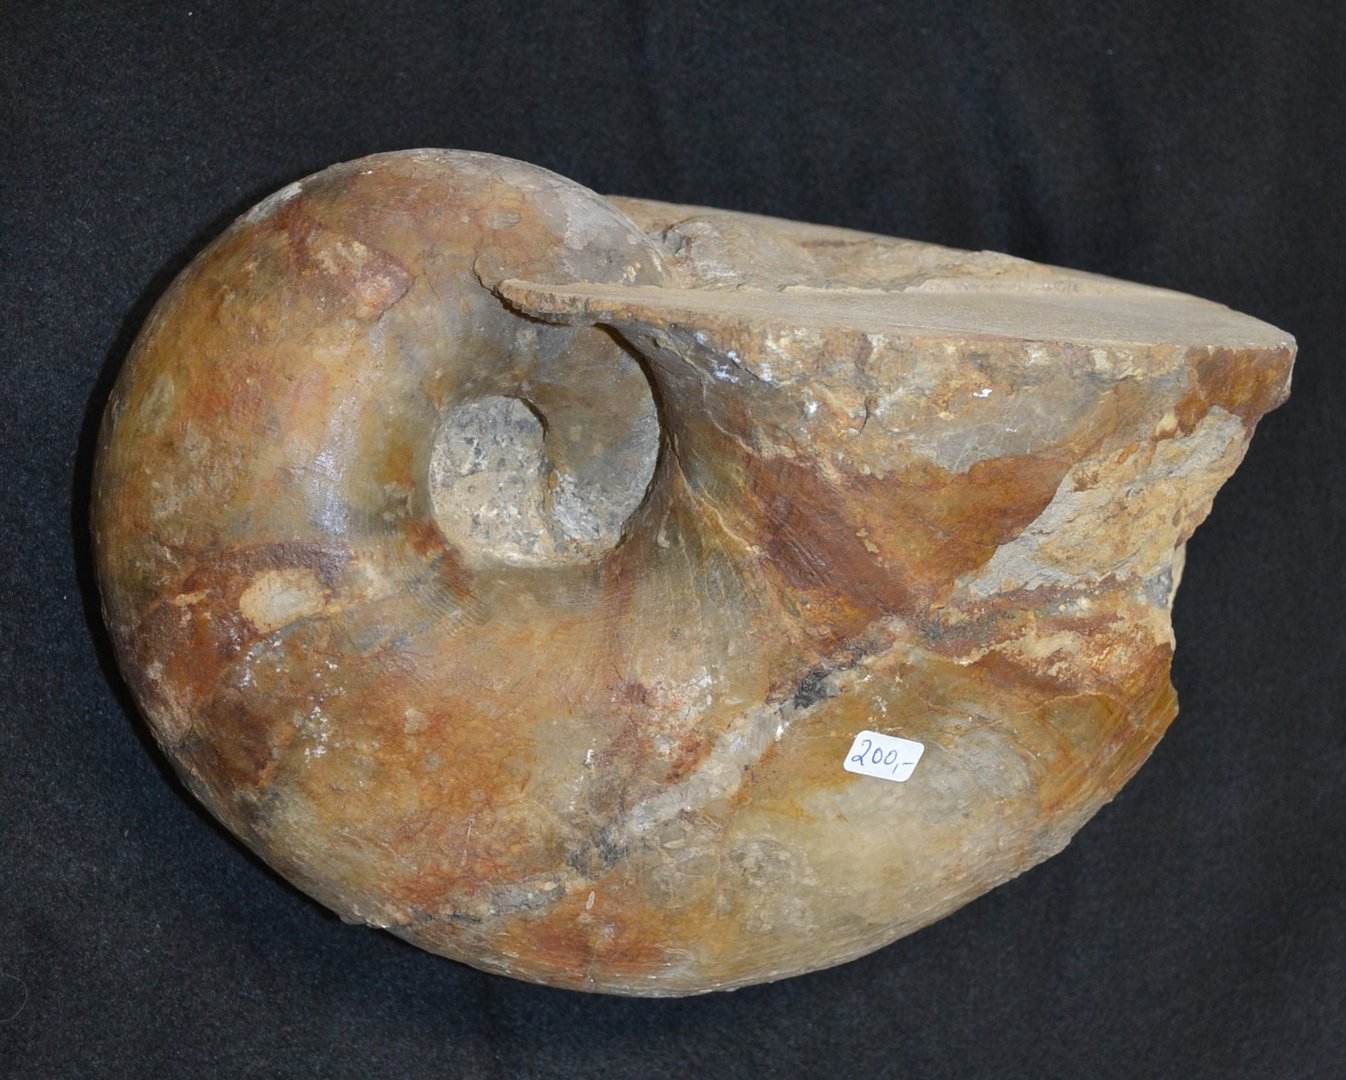 fossiel nautilus     Jurassic-tijdperk     Normandië, Frankrijk